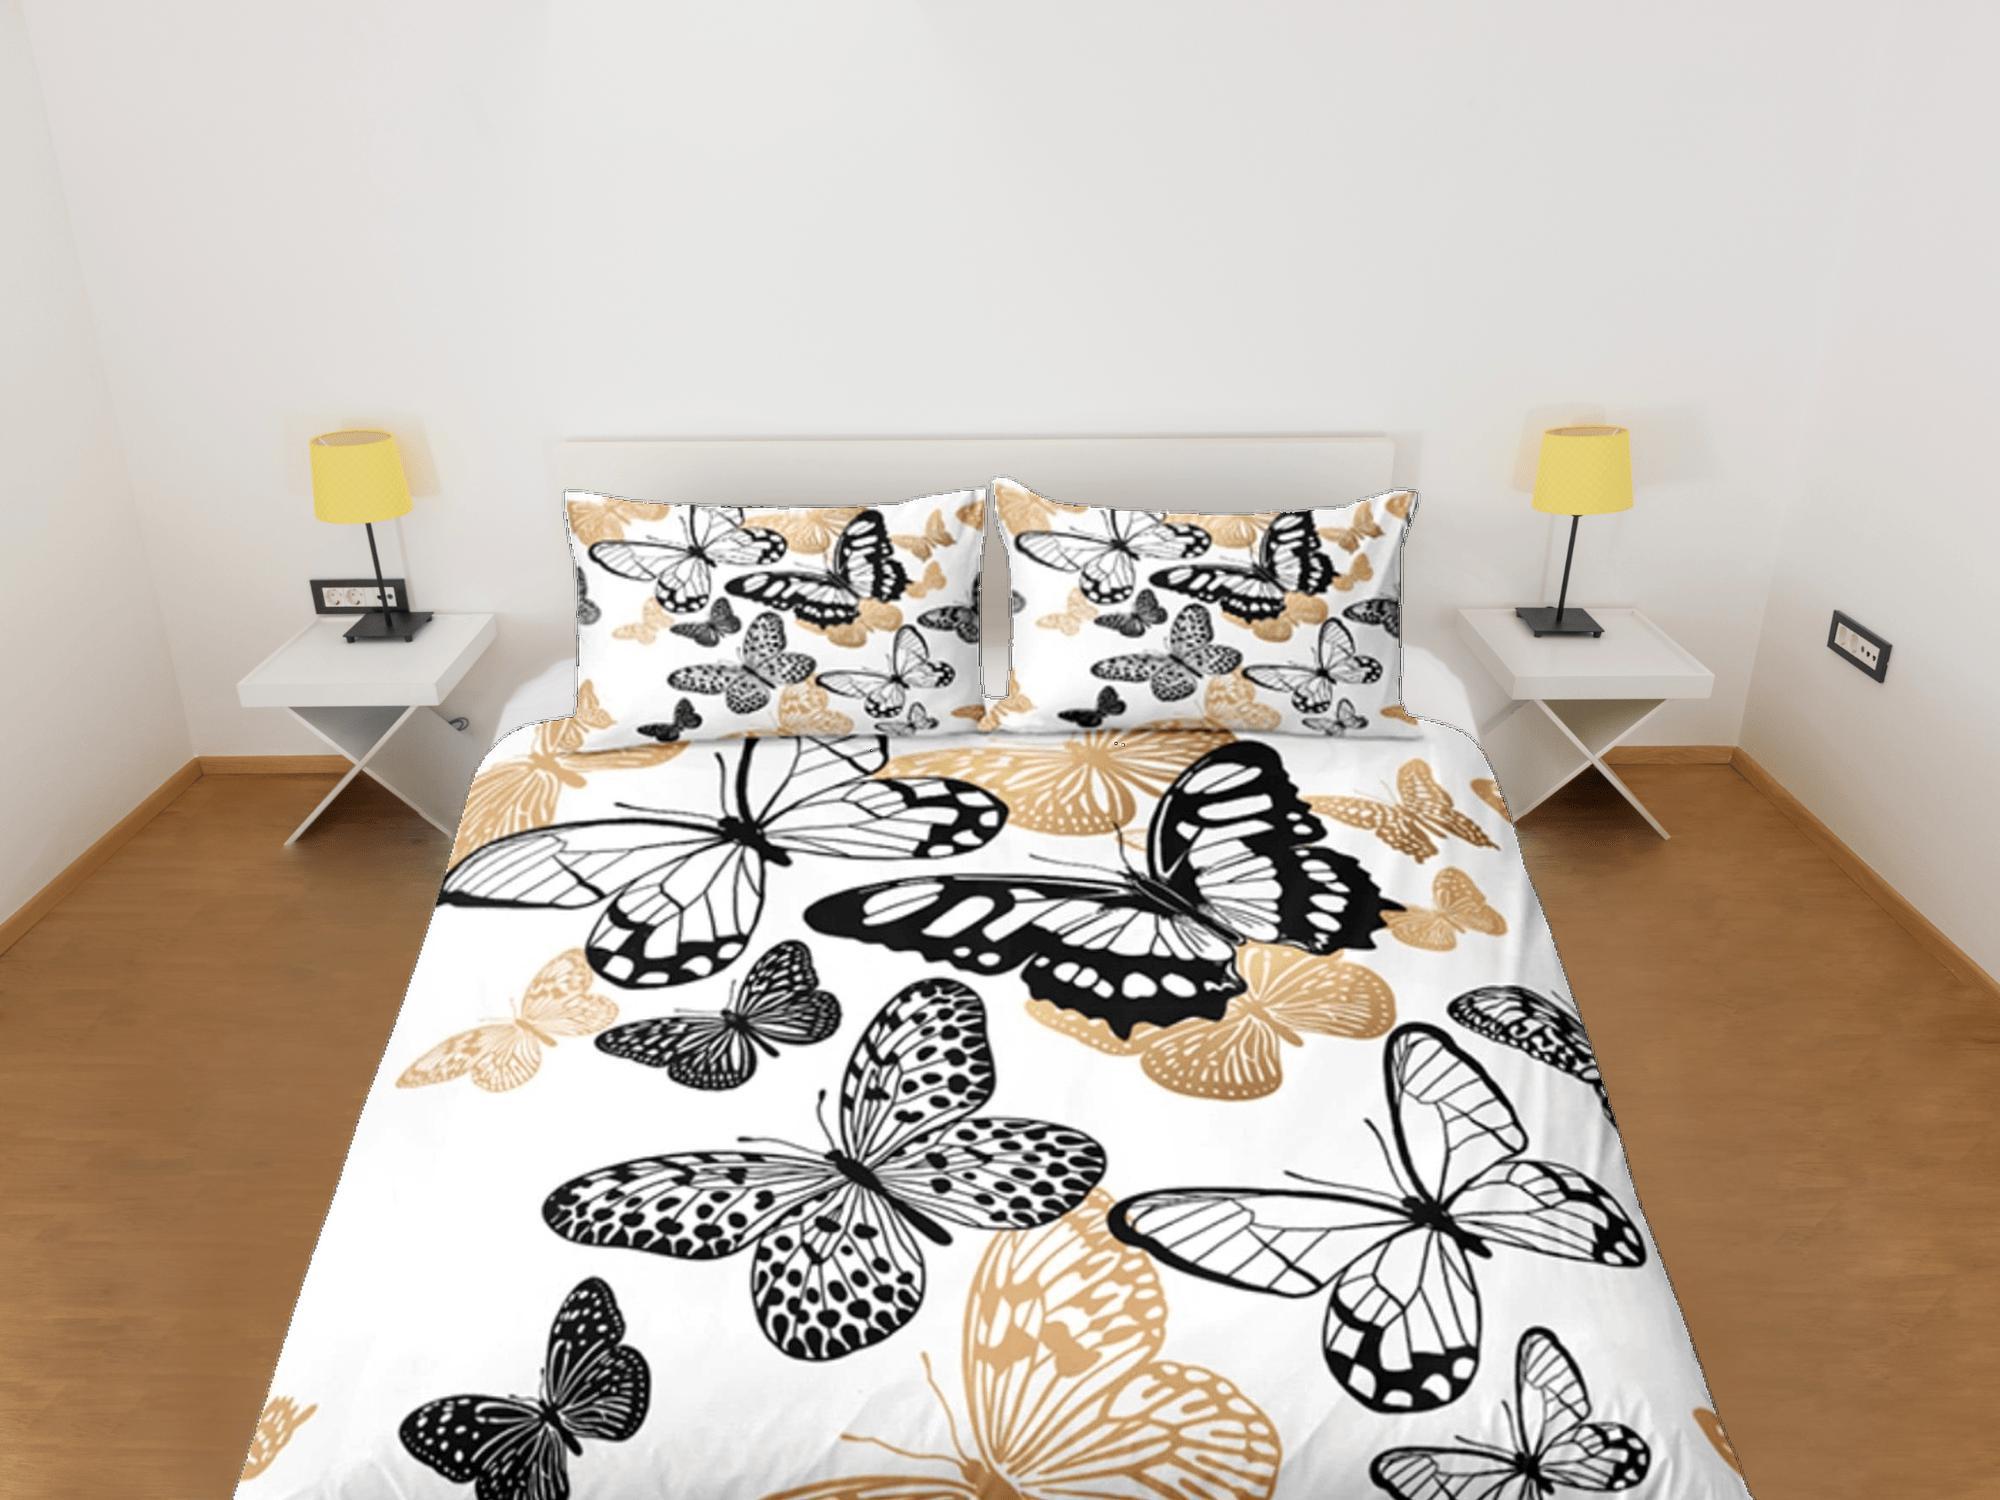 daintyduvet Butterfly Duvet Cover Set White Bedspread, Dorm Bedding with Pillowcase